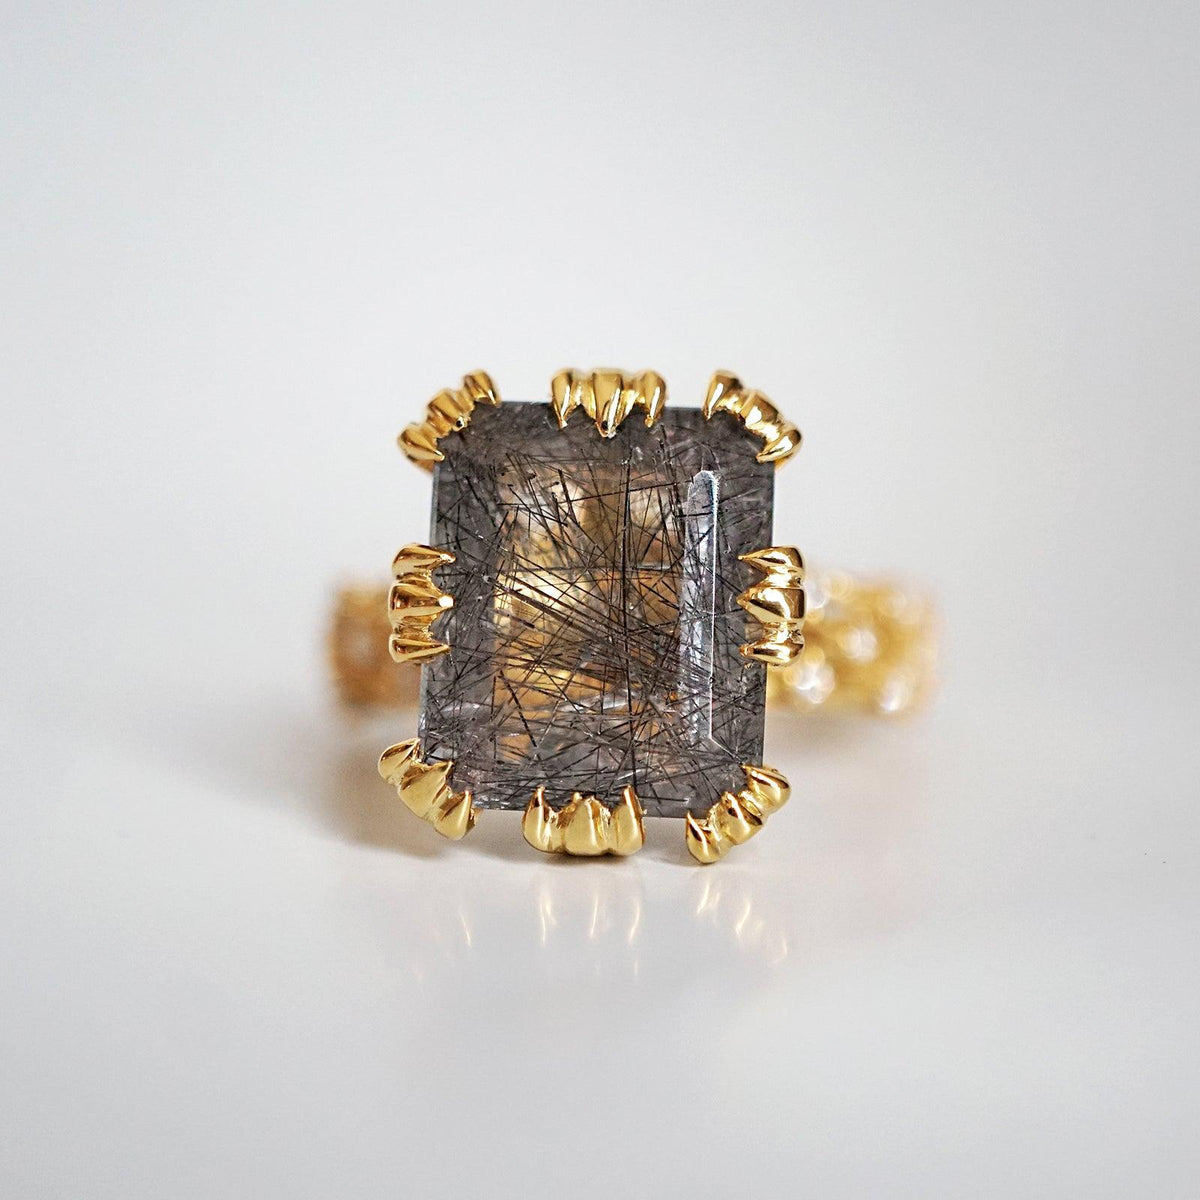 Empress Rutilated Quartz Diamond Ring in 14K and 18K Gold